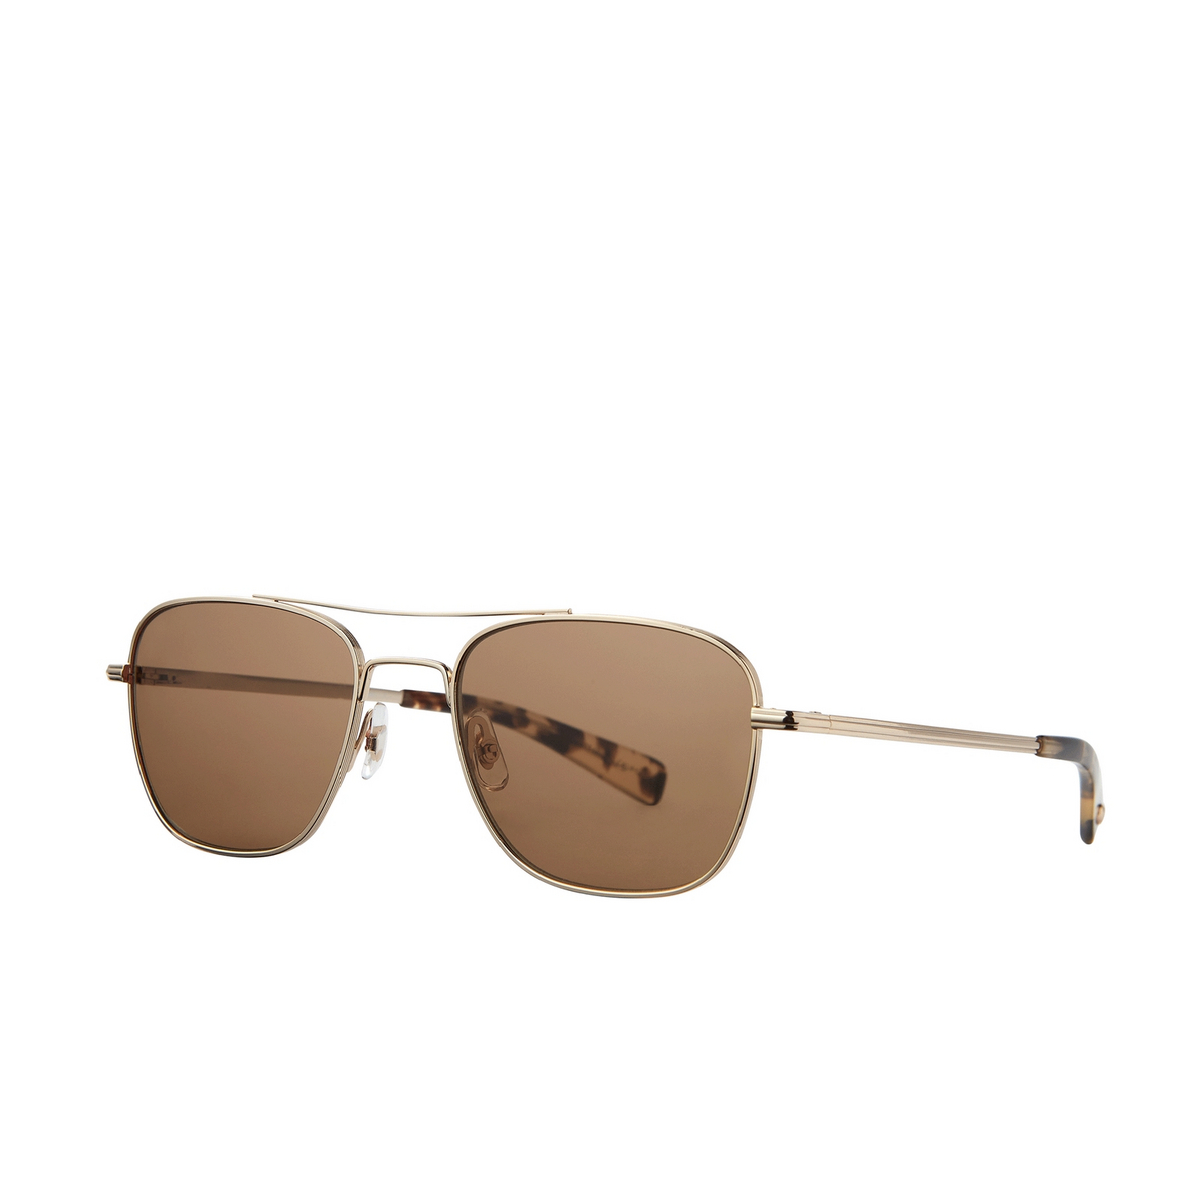 Garrett Leight® Aviator Sunglasses: Harbor Sun color G-yt/brnsuv Gold-yellow Tortoise/brown Suv - three-quarters view